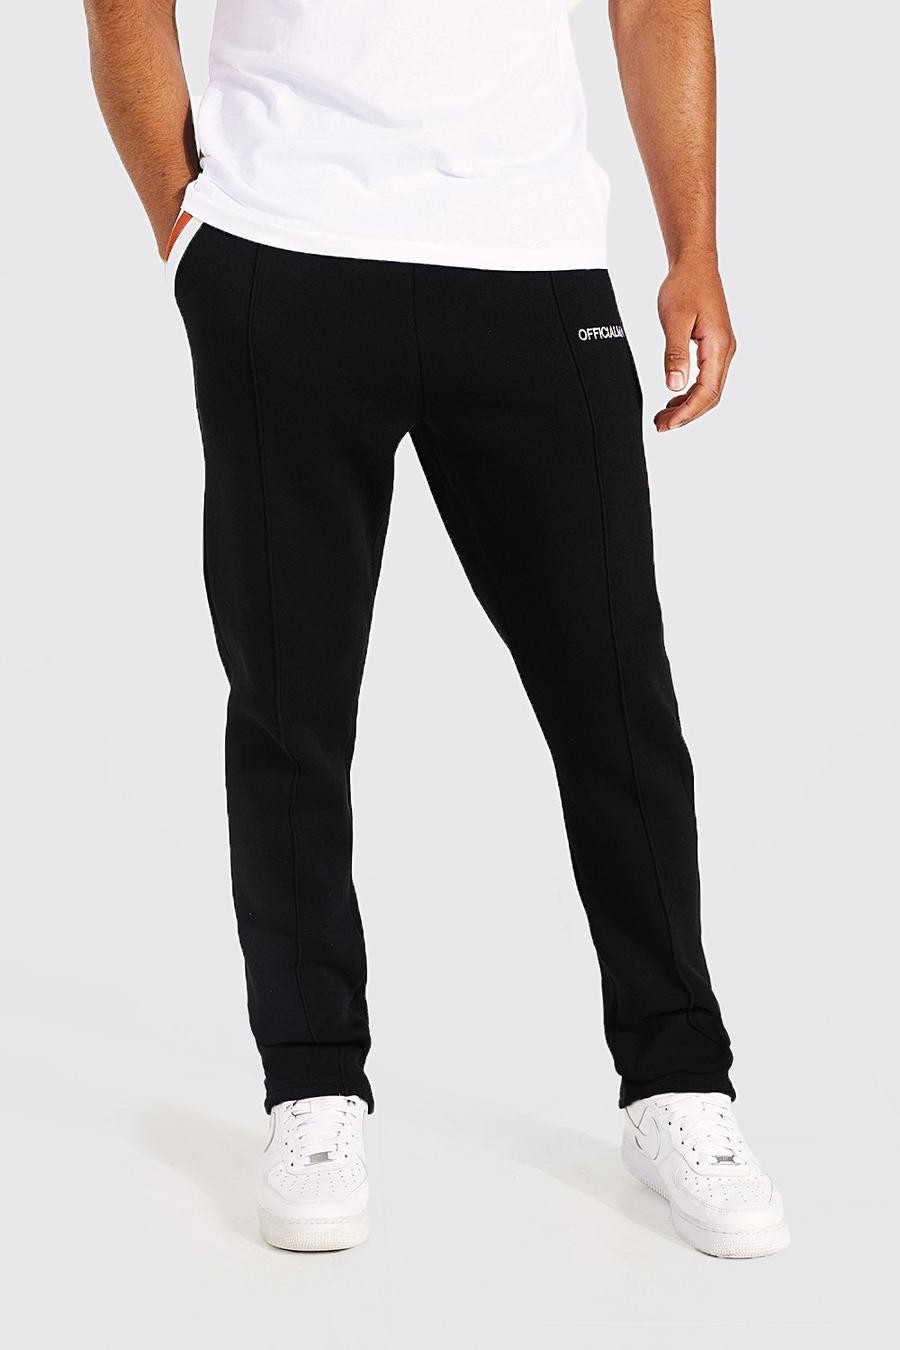 Pantaloni tuta Tall Slim Fit con nervature, strisce e tasche, Black nero image number 1